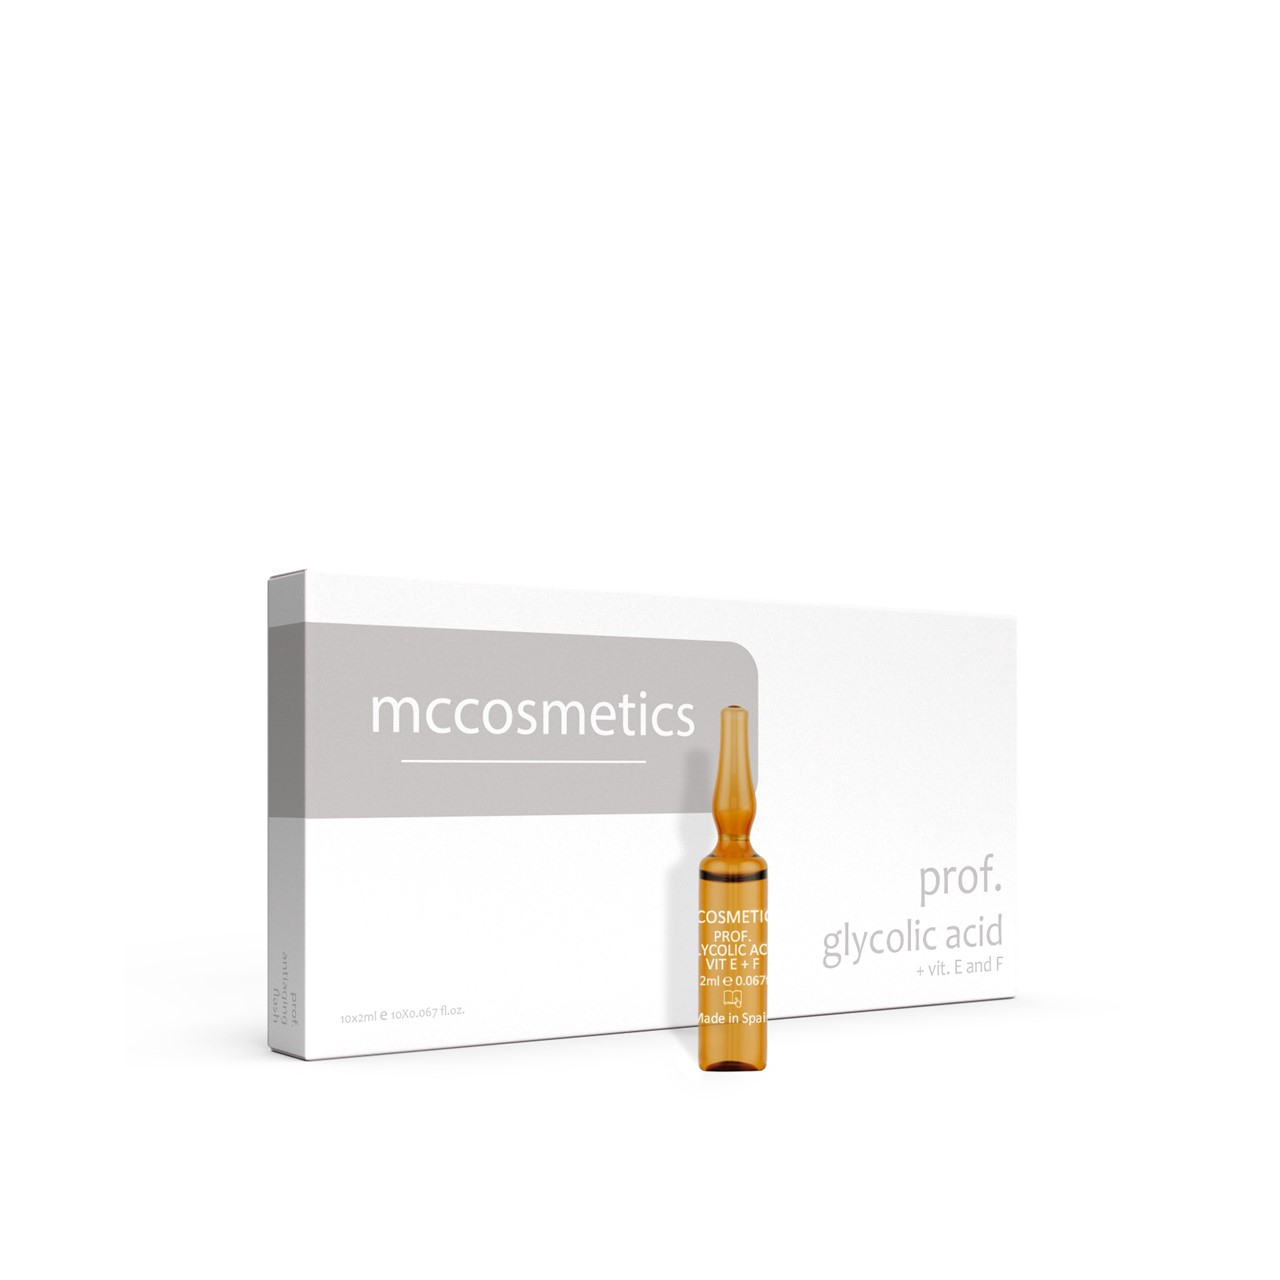 mccosmetics Prof. Glycolic Acid + Vit. E and F Ampoules 10x2ml (10x0.07fl oz)